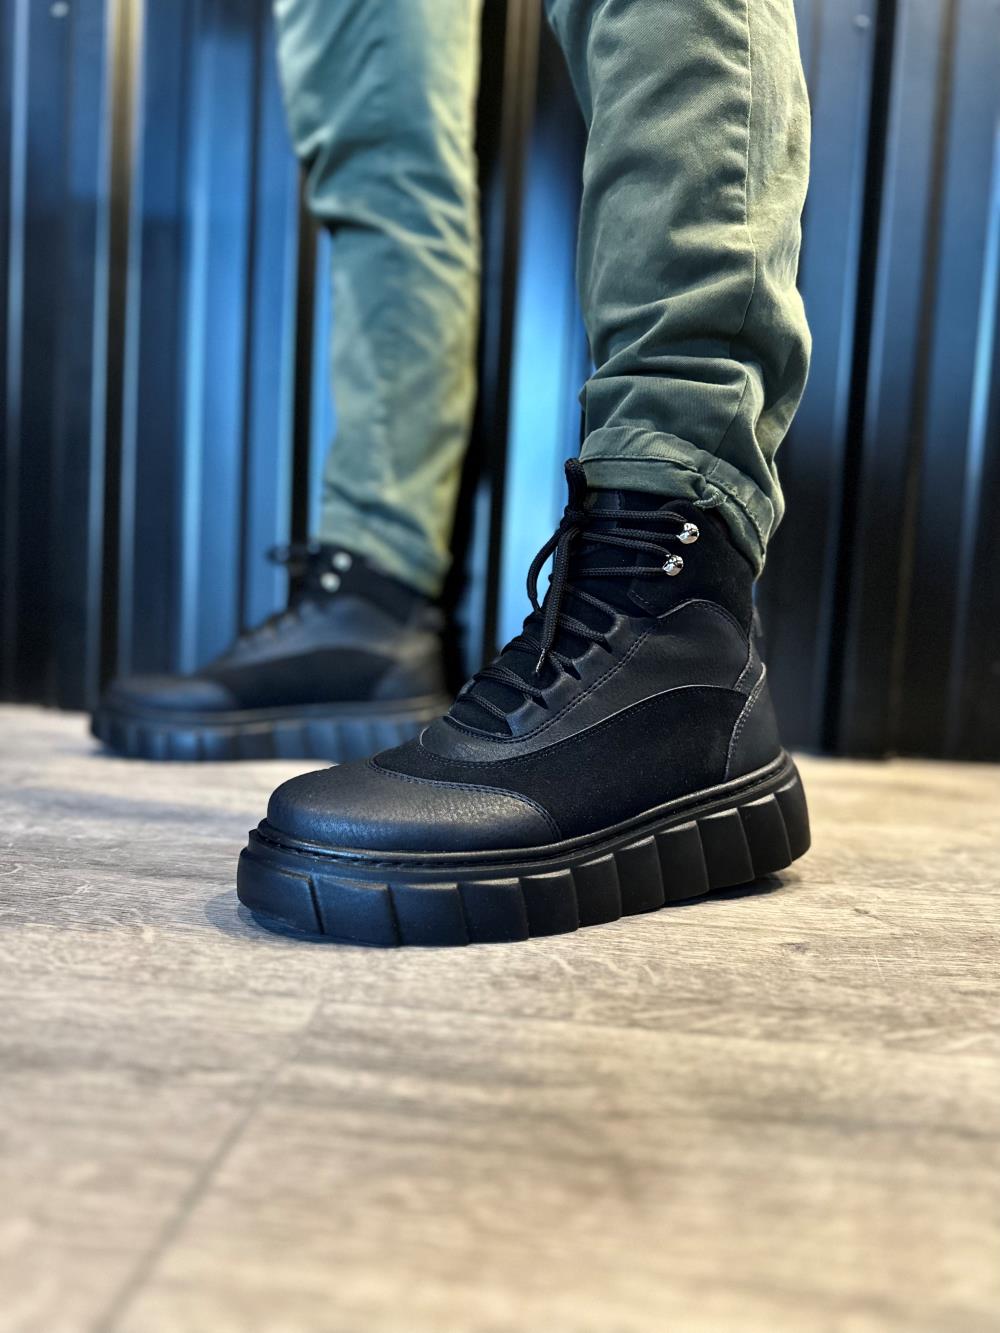 Men's High Heel Boots 104 Black (Black Sole) - STREETMODE ™